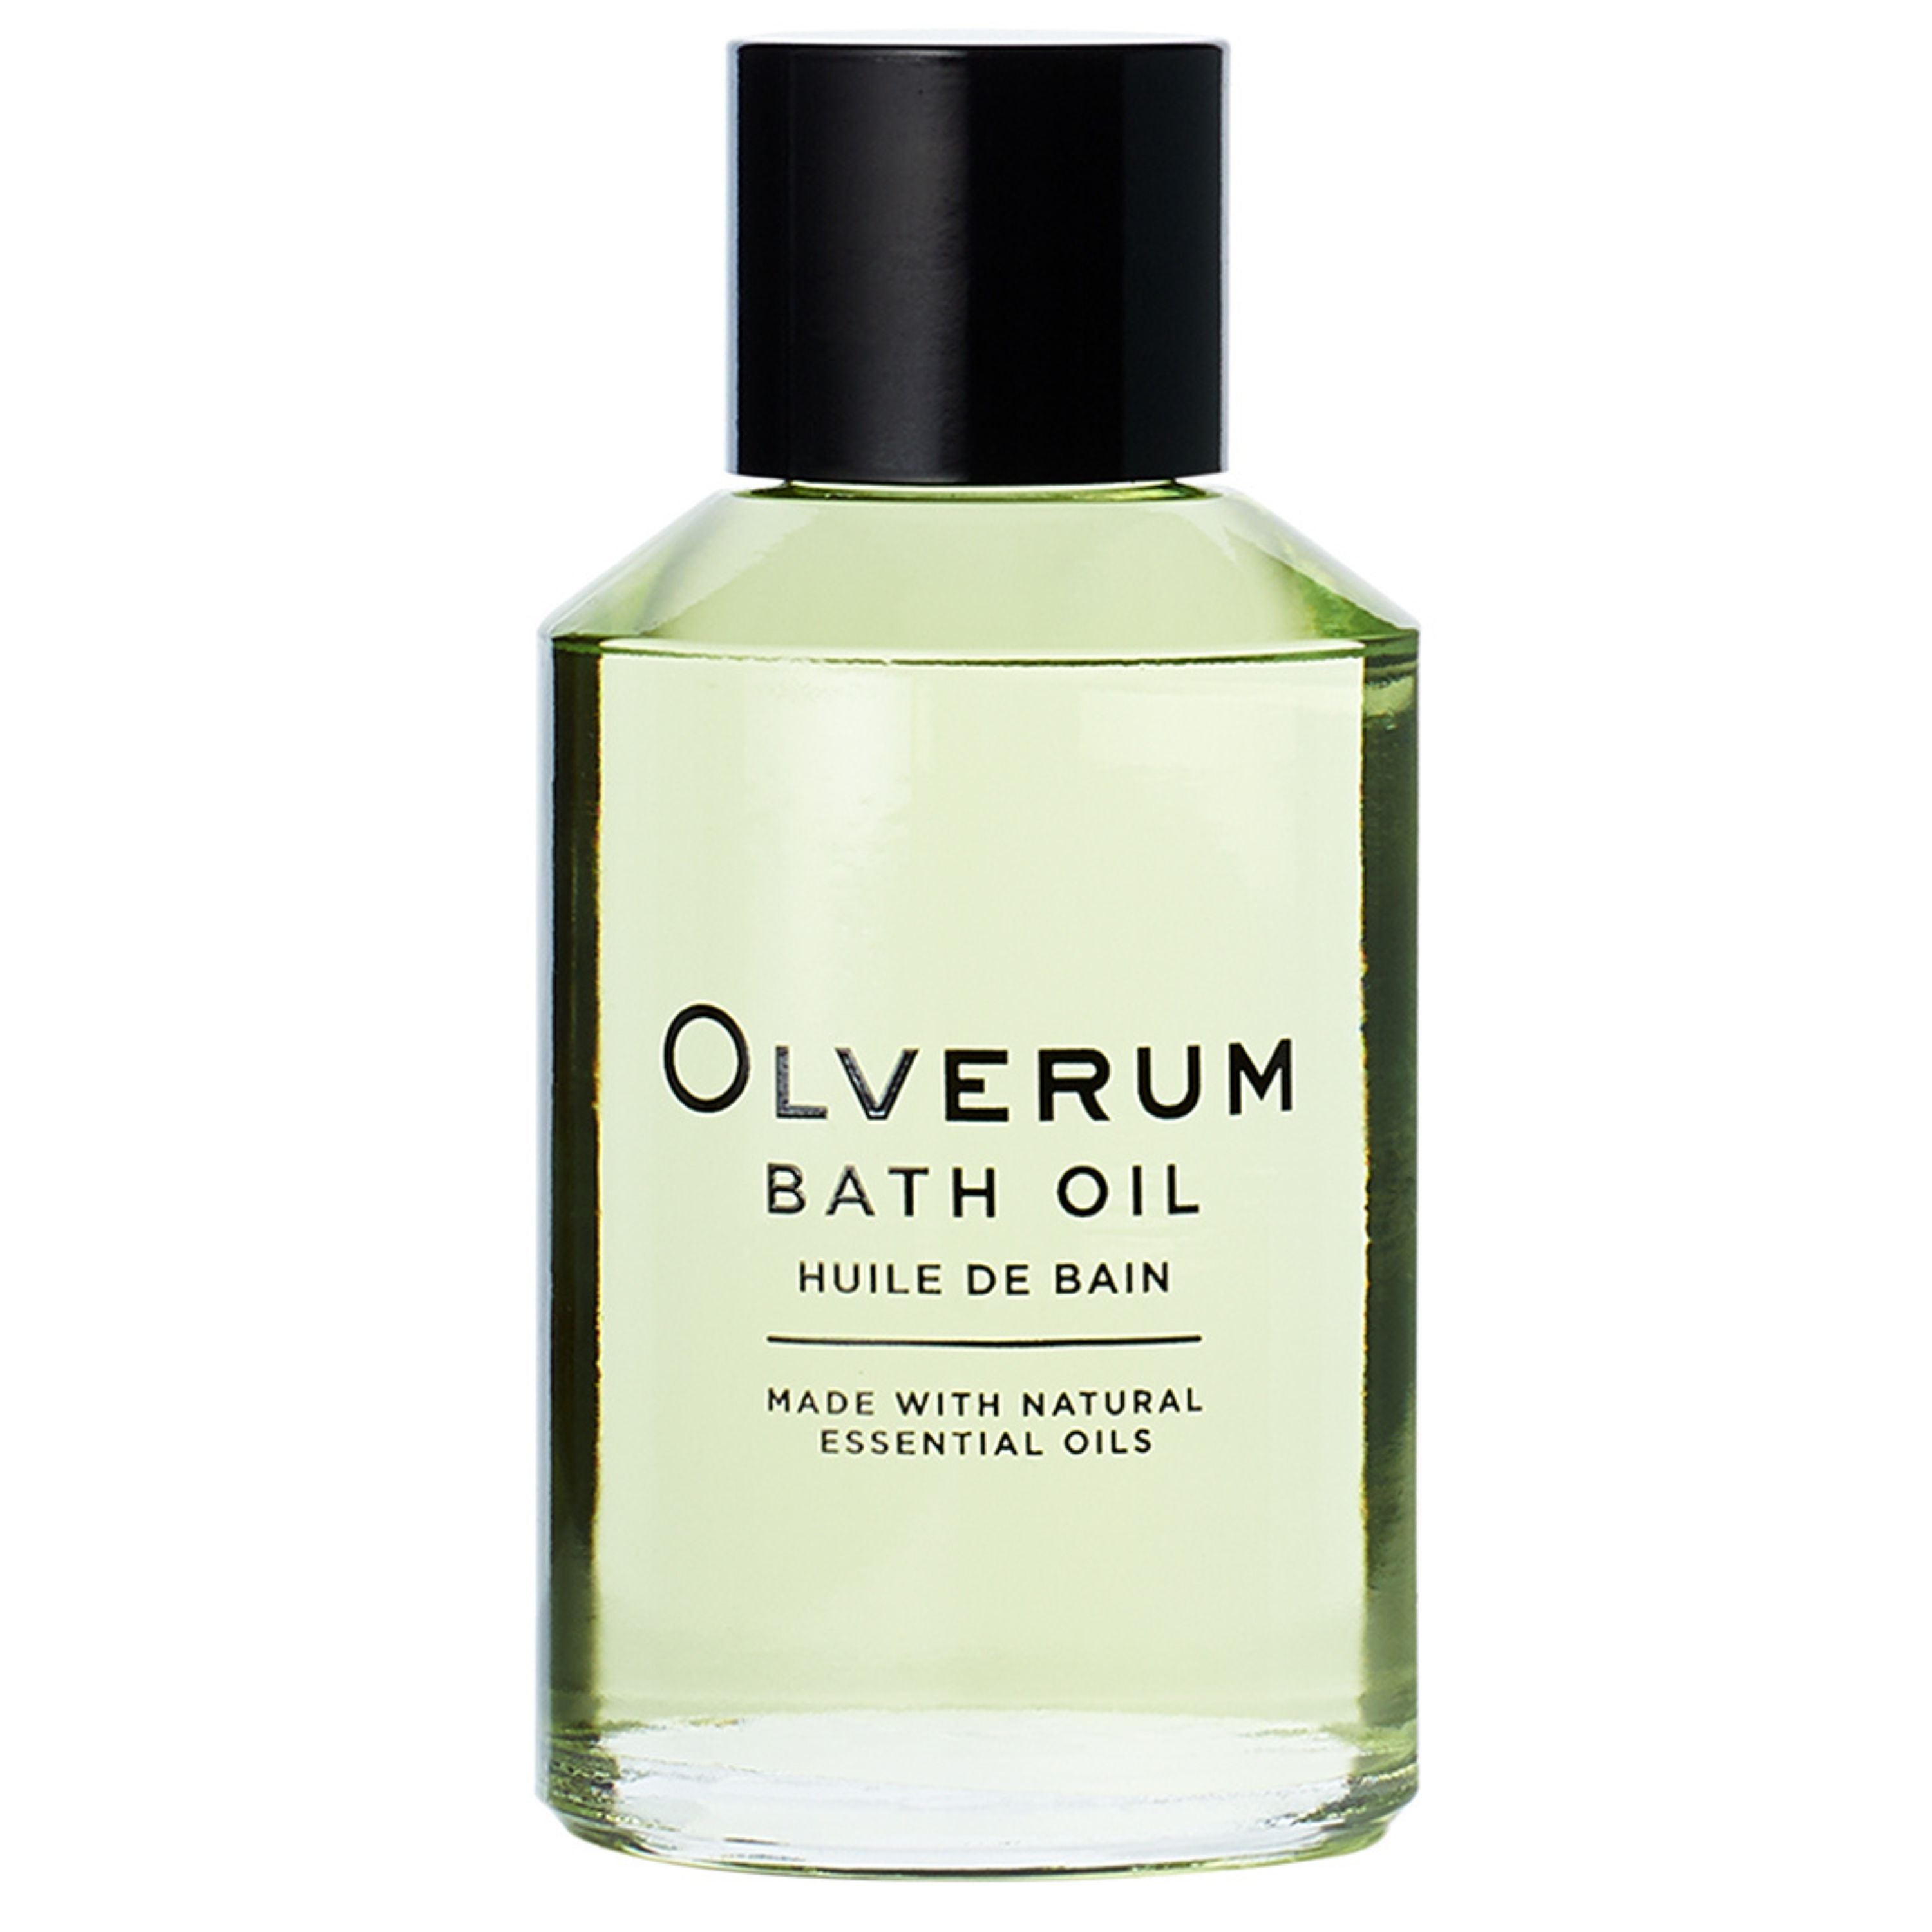 Olverum Bath Oil 125ml